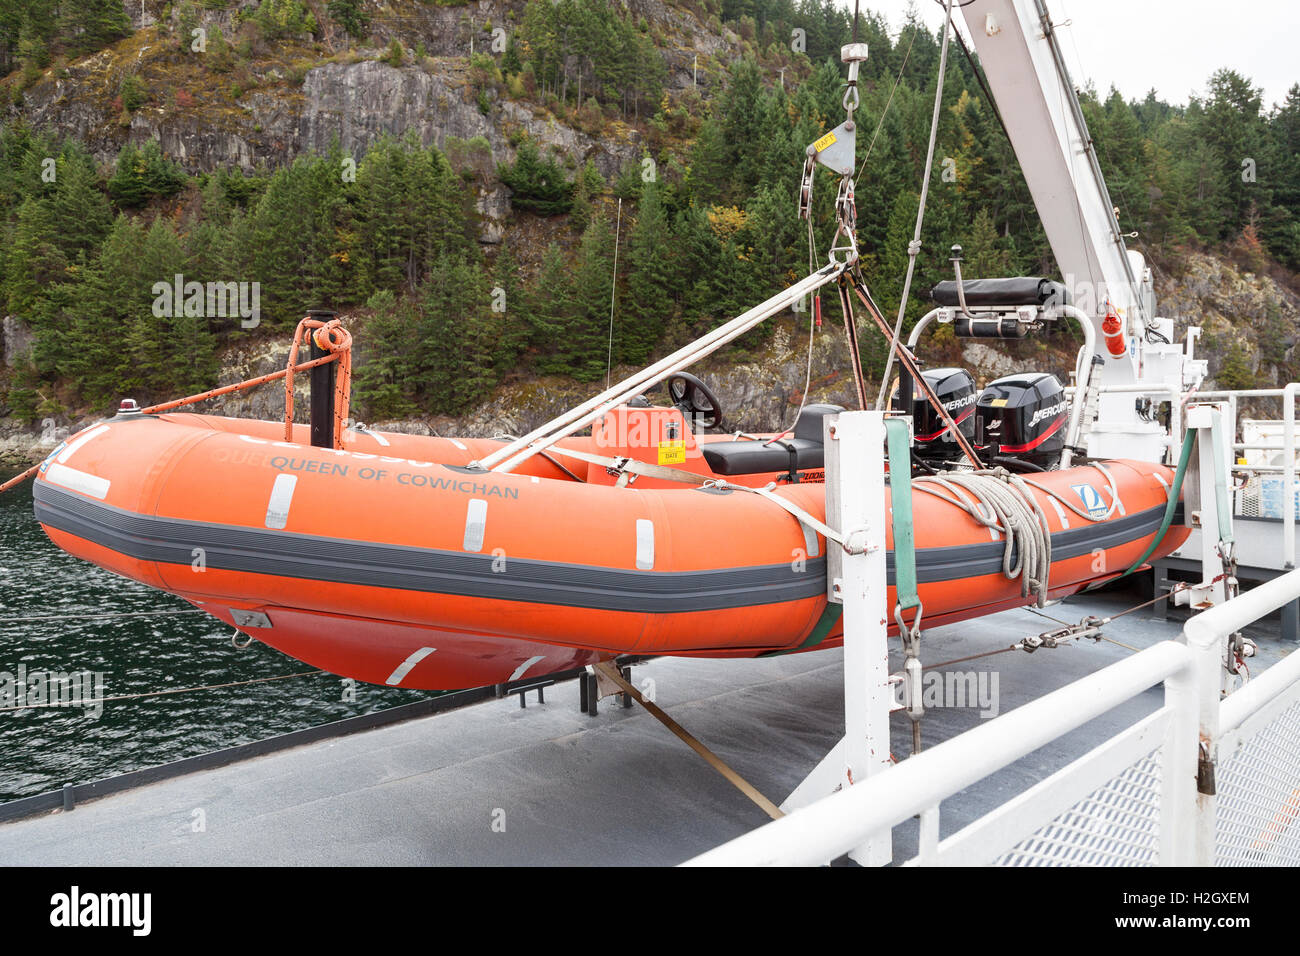 Bote inflable rígido RIB utilizado como un barco de vida a bordo de un ferry 'Reina de Cowichan' la isla de Vancouver, en Columbia Británica, Canadá Foto de stock